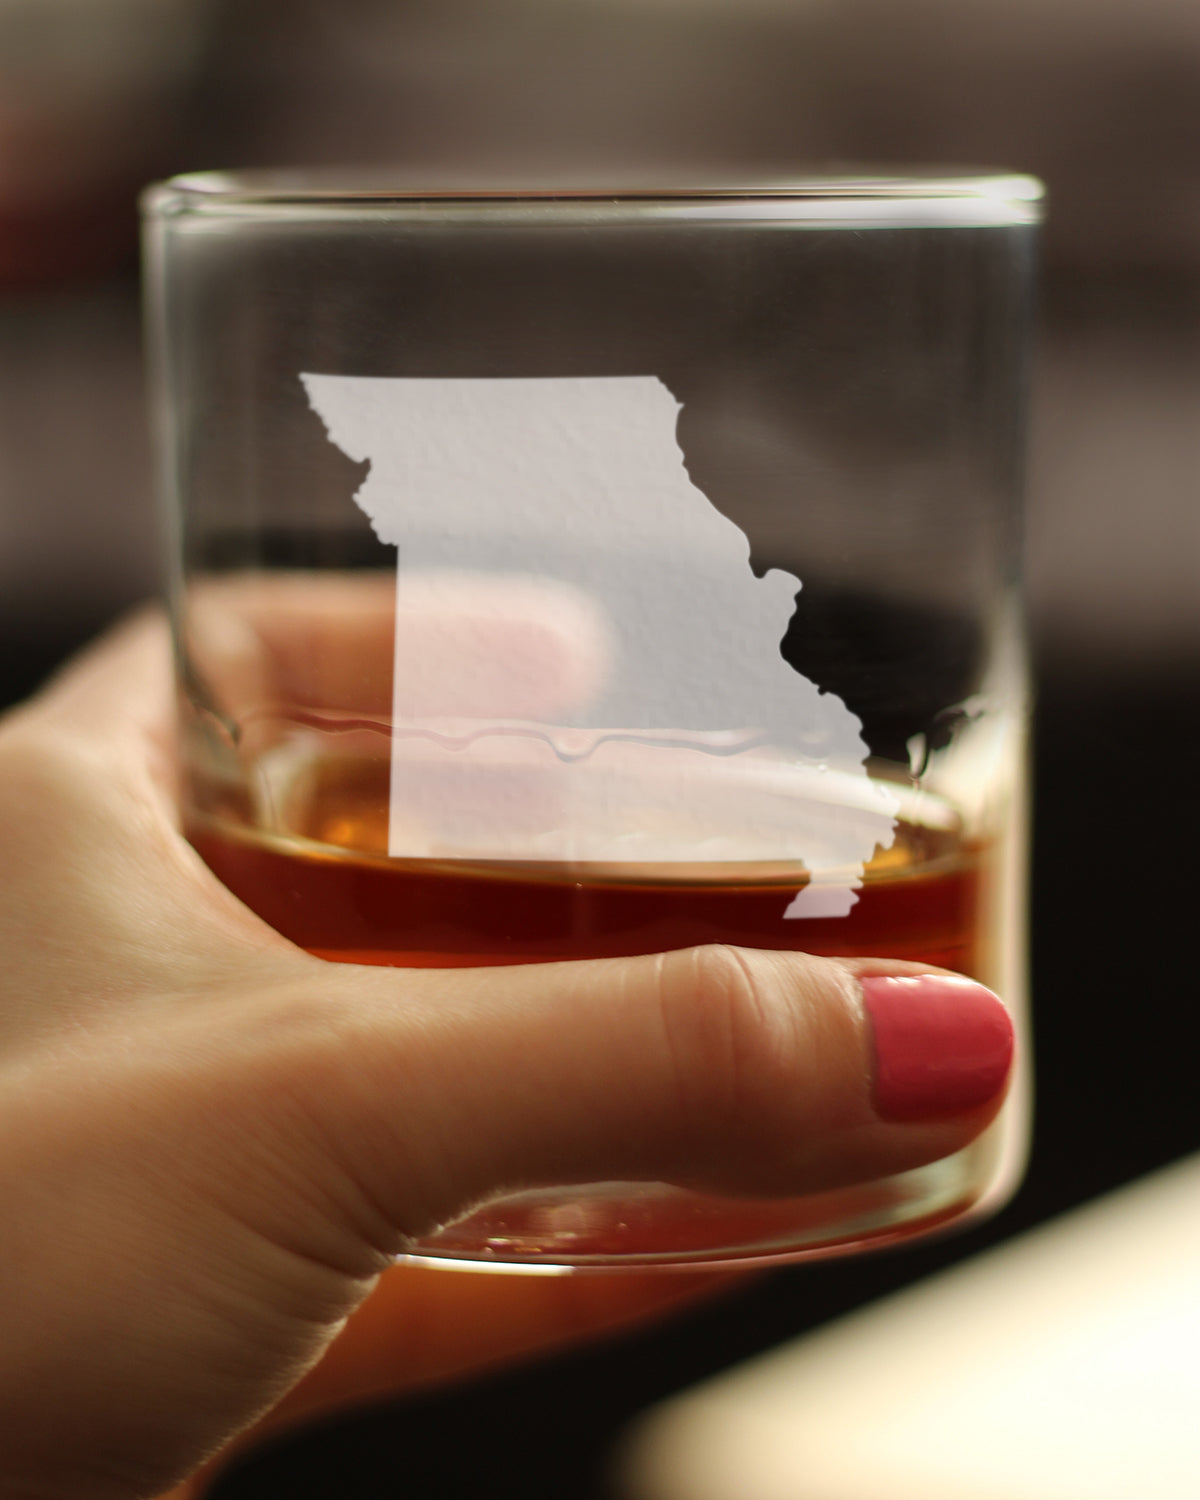 Missouri State Outline Whiskey Rocks Glass - State Themed Drinking Decor and Gifts for Missourian Women &amp; Men - 10.25 Oz Whisky Tumbler Glasses